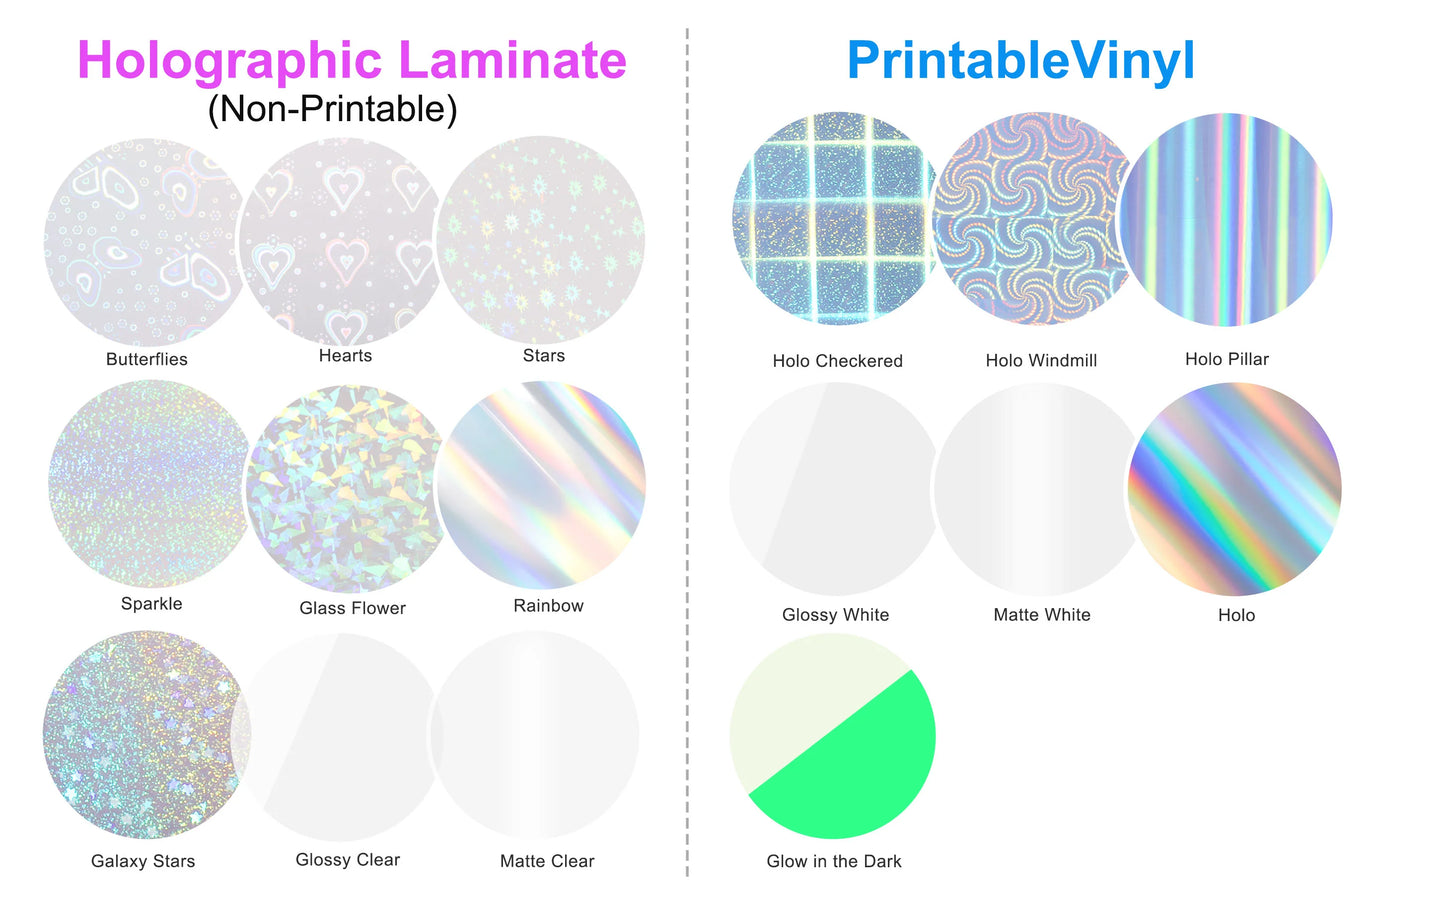 Teckwrap Inkjet Printable Sticker Vinyl